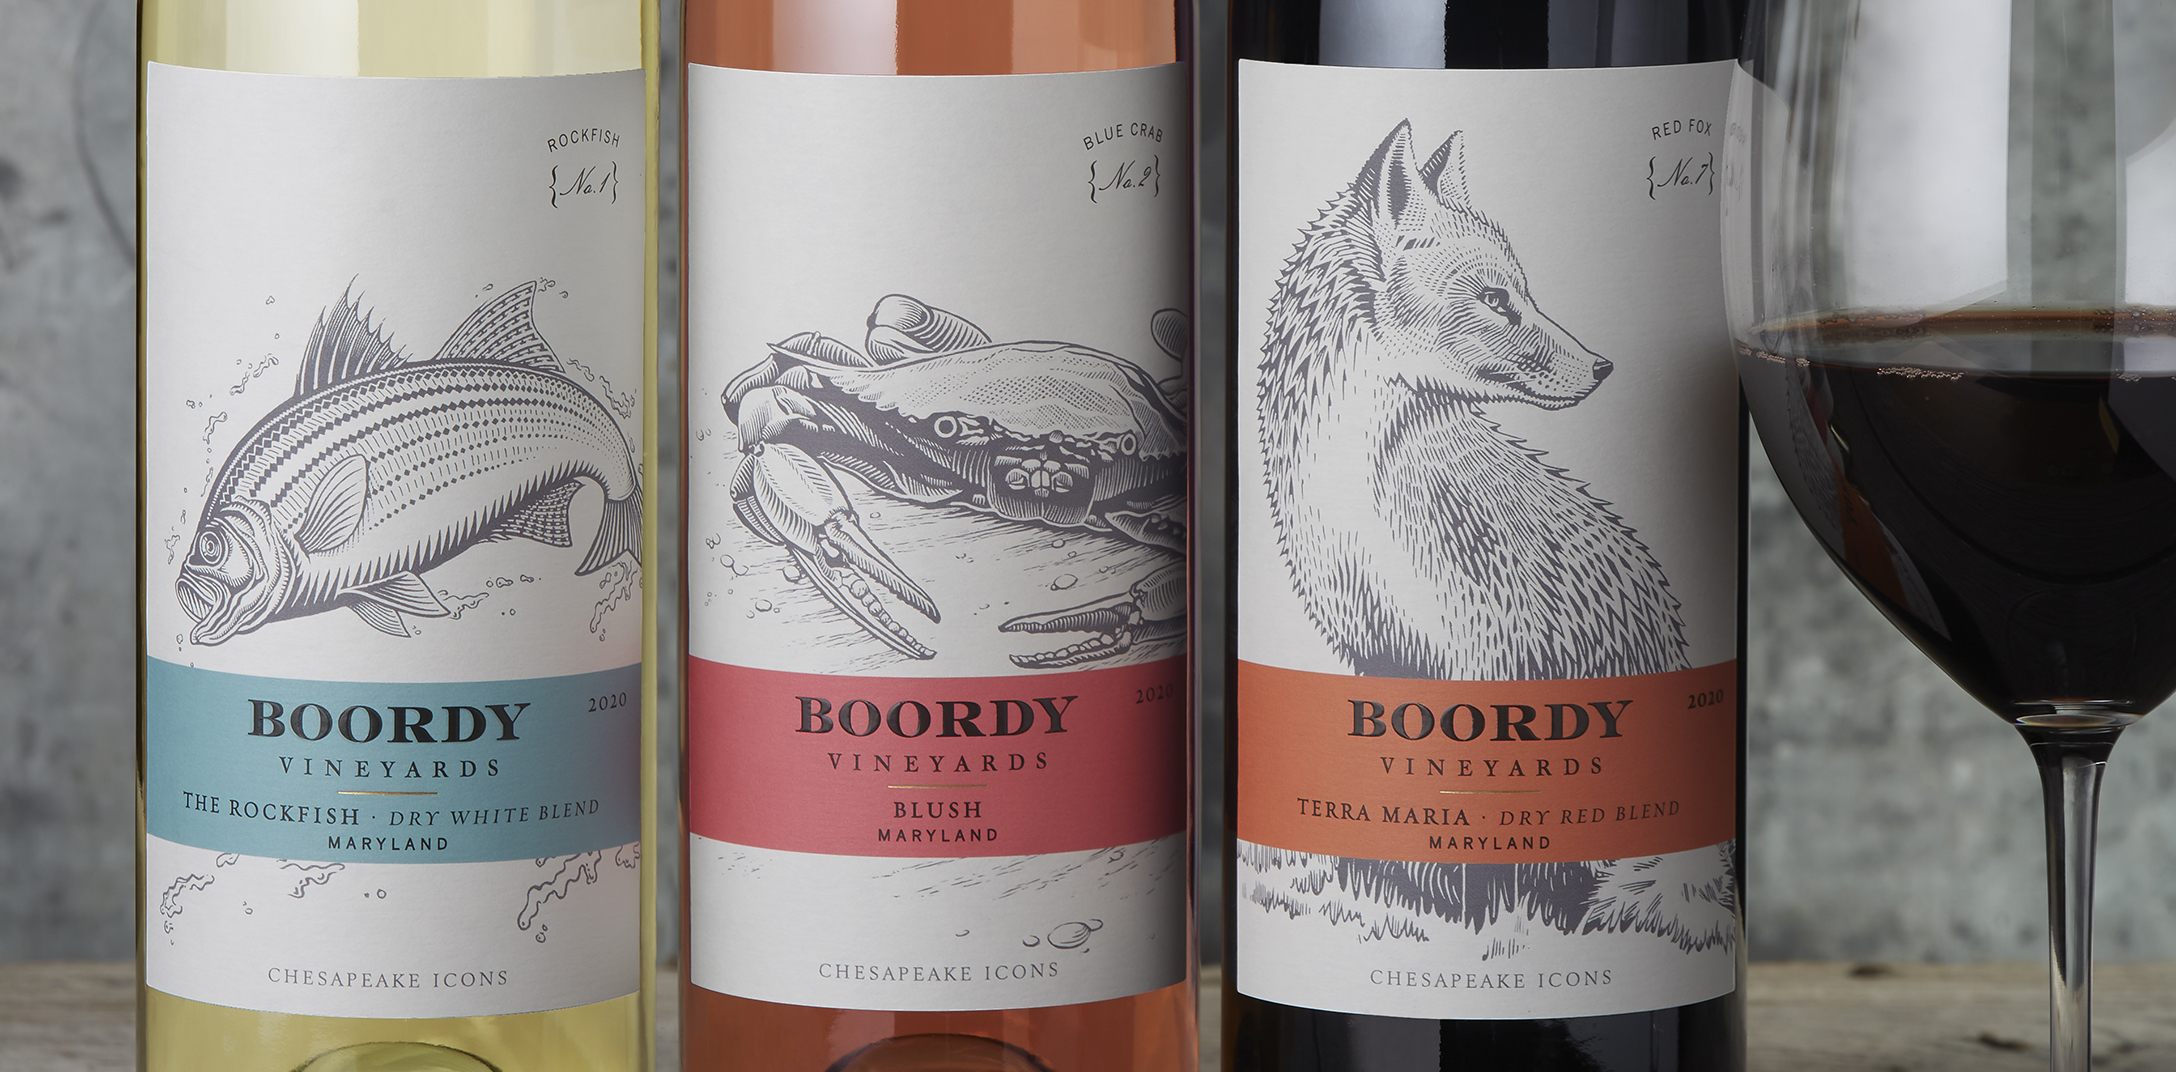 Boordy Vineyards Chesapeake Icons